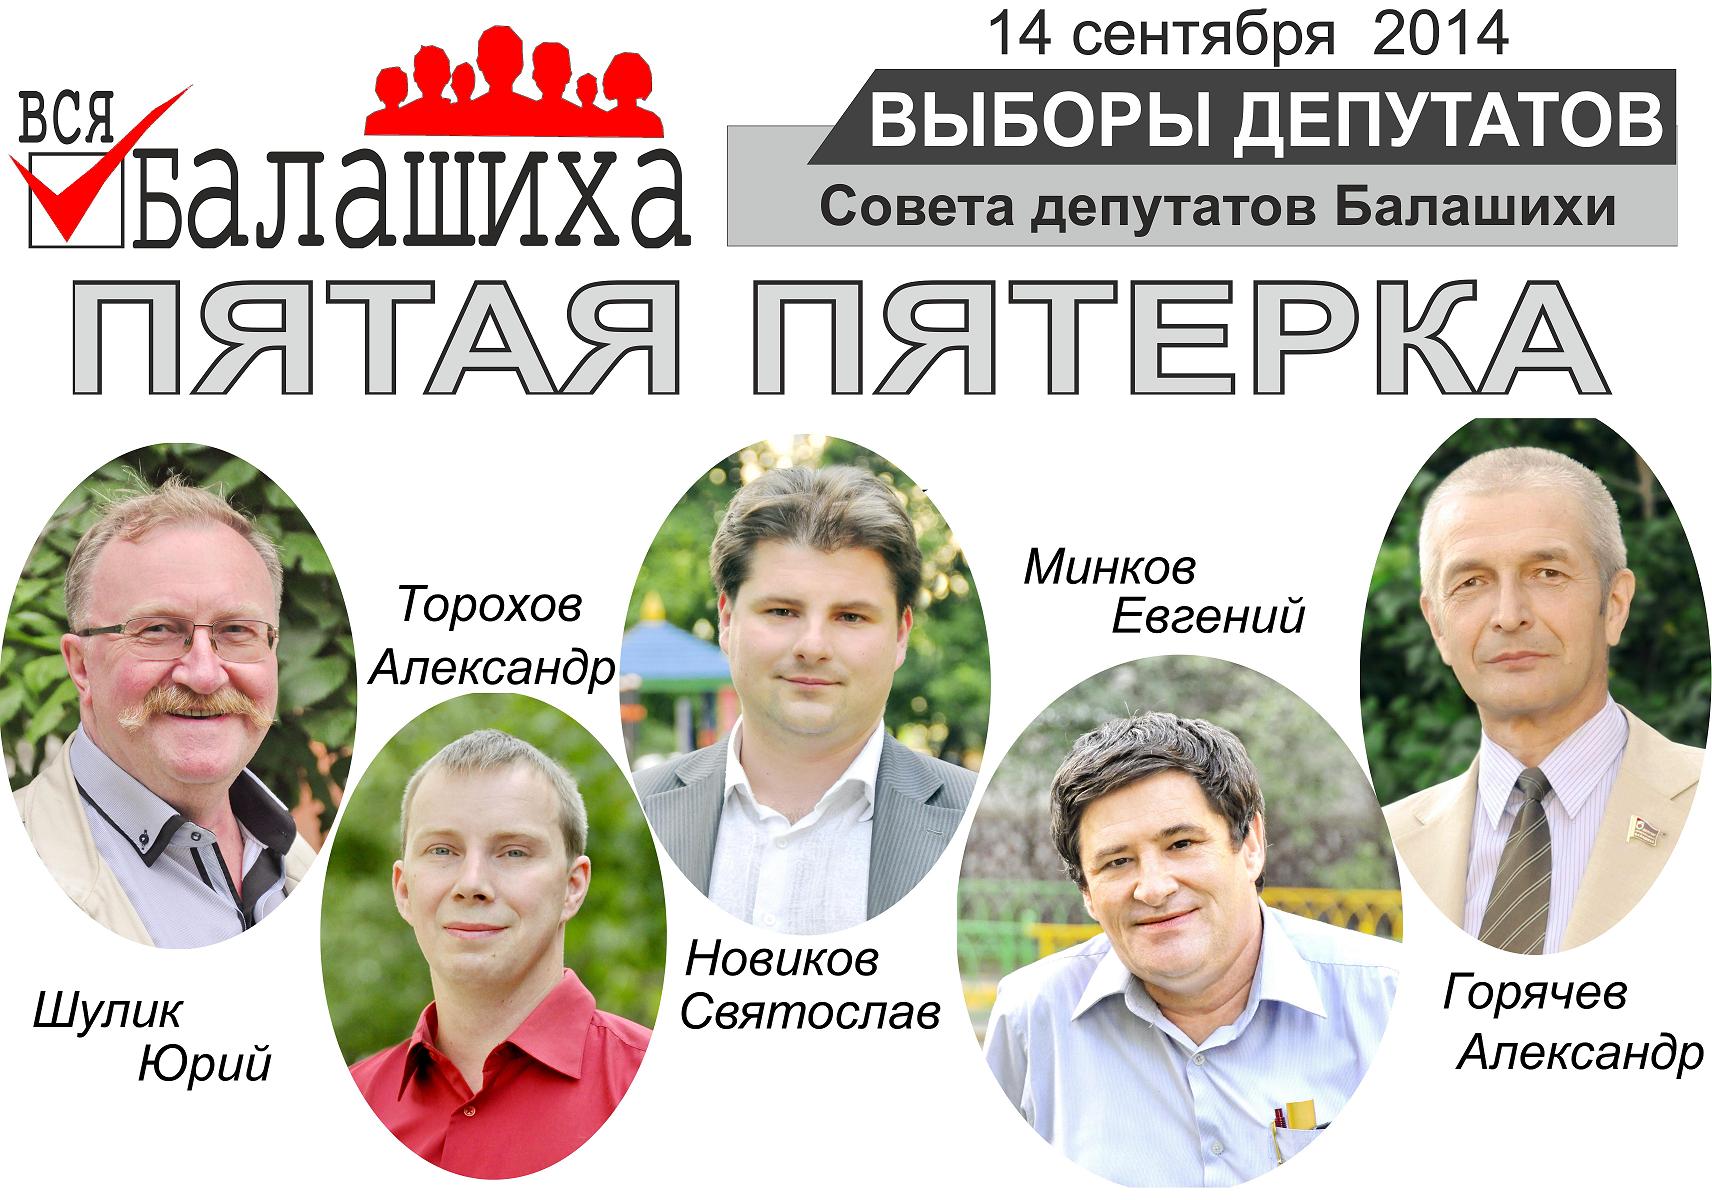 http://nikola-apx.ucoz.ru/MSY/Darmomy/2014/Agitazzia/plakat_5_1.jpg